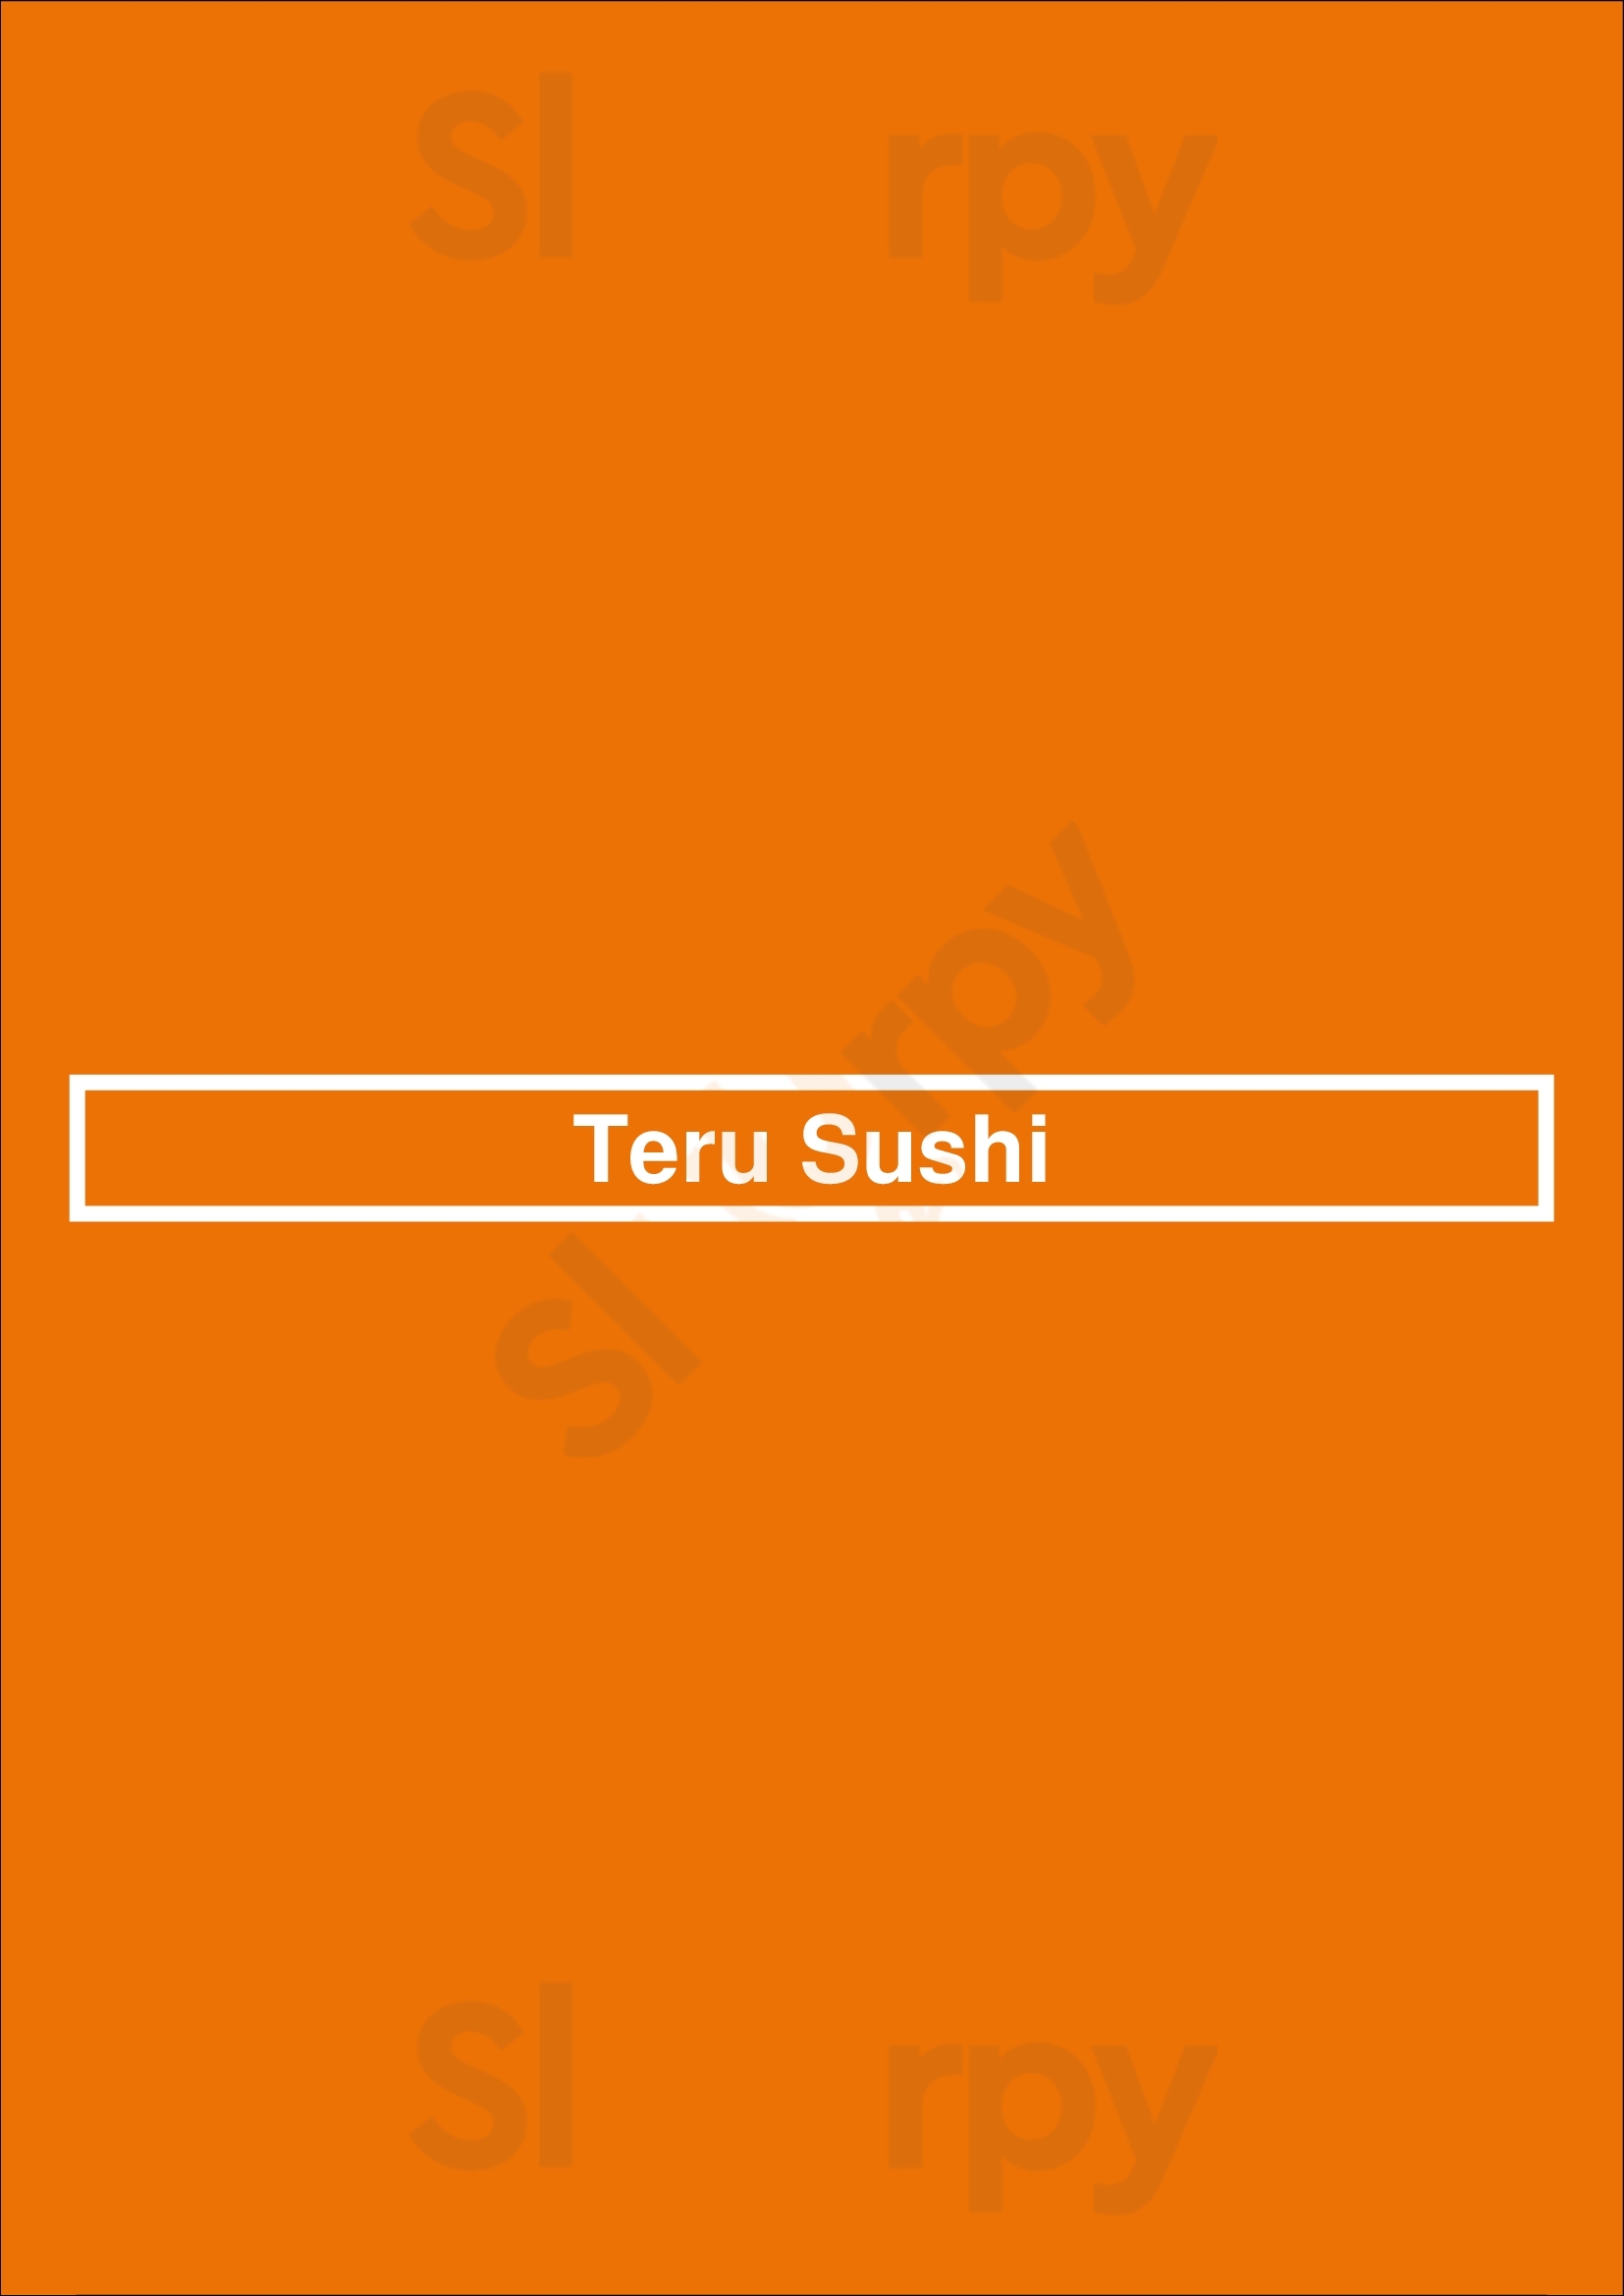 Teru Sushi Los Angeles Menu - 1